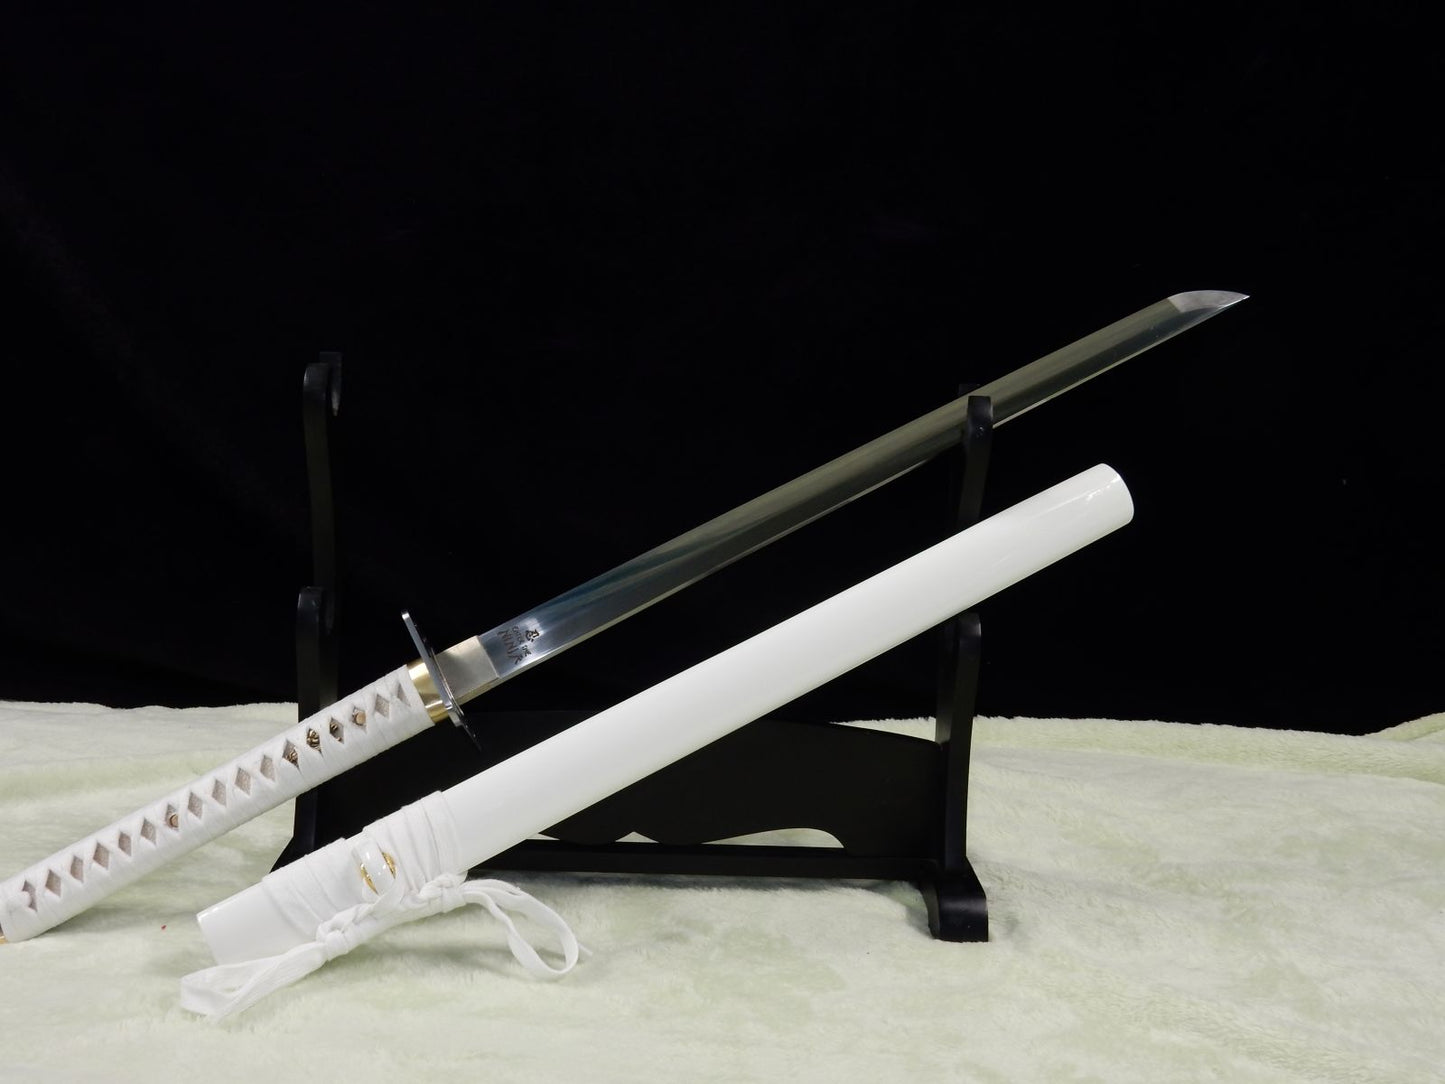 White Ninja sword